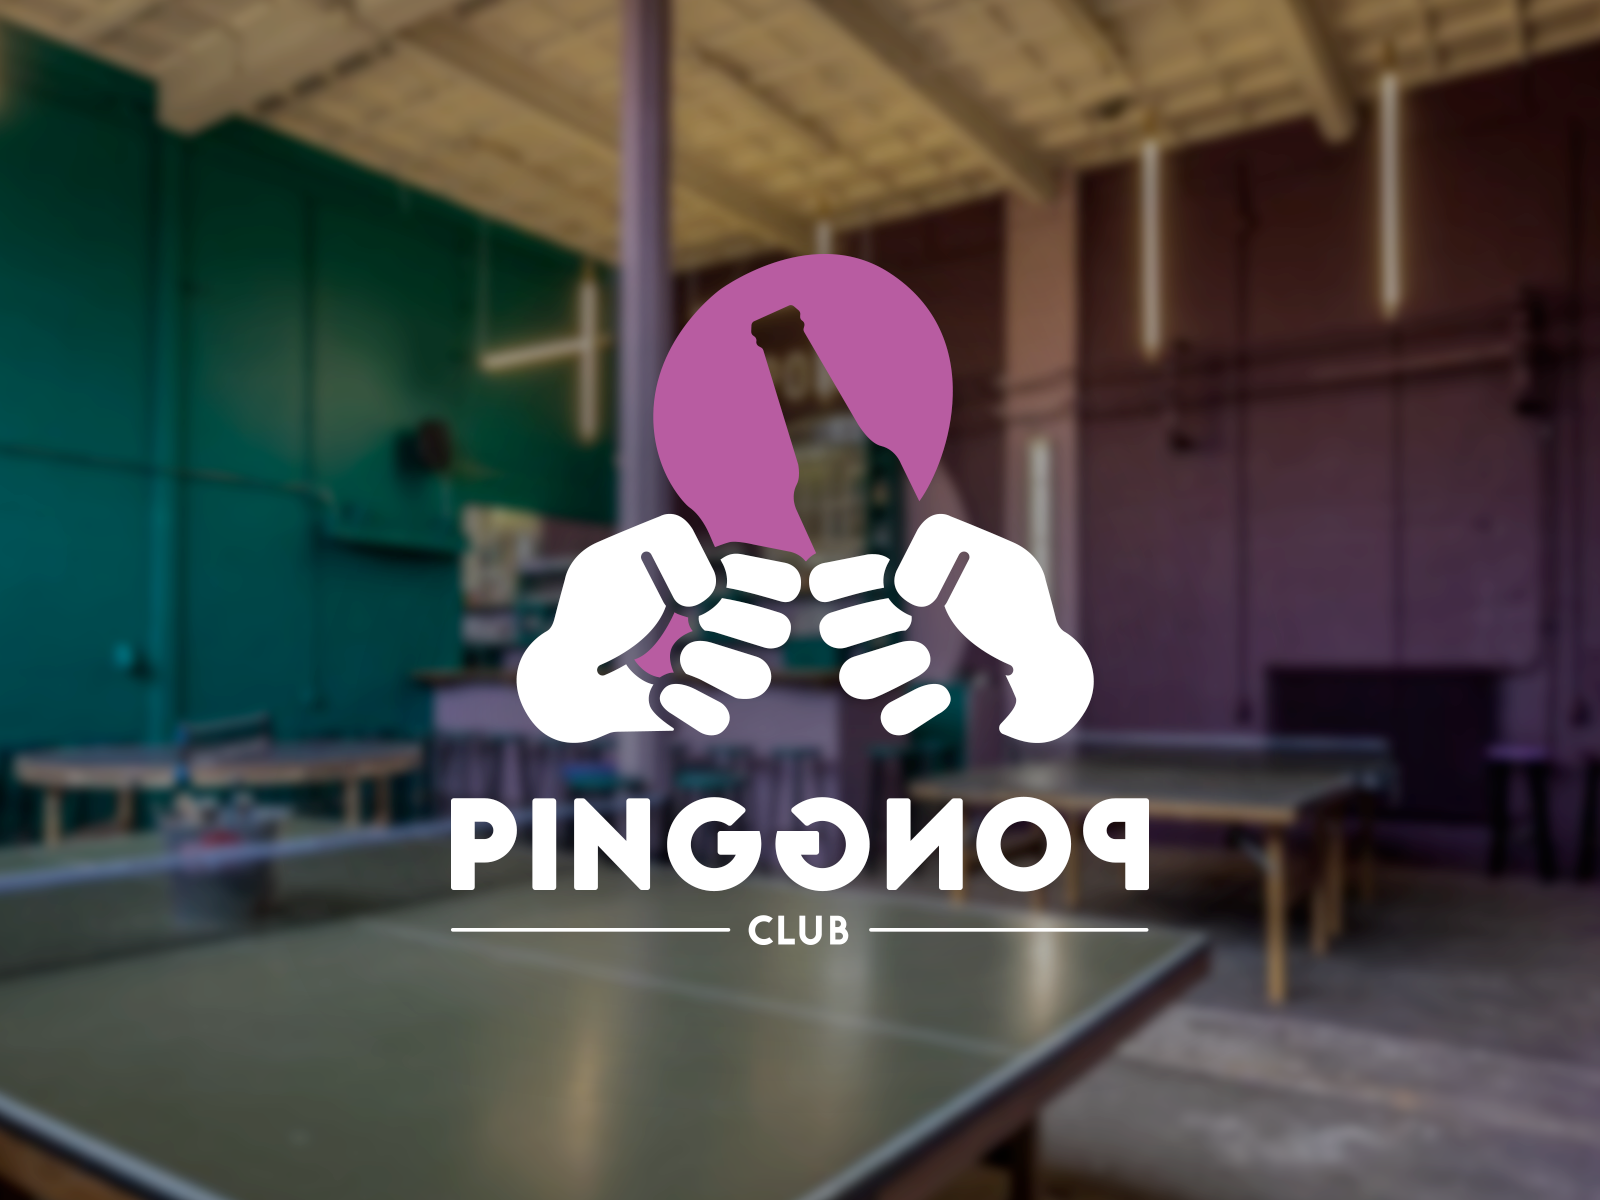 Ping Pong Club logo